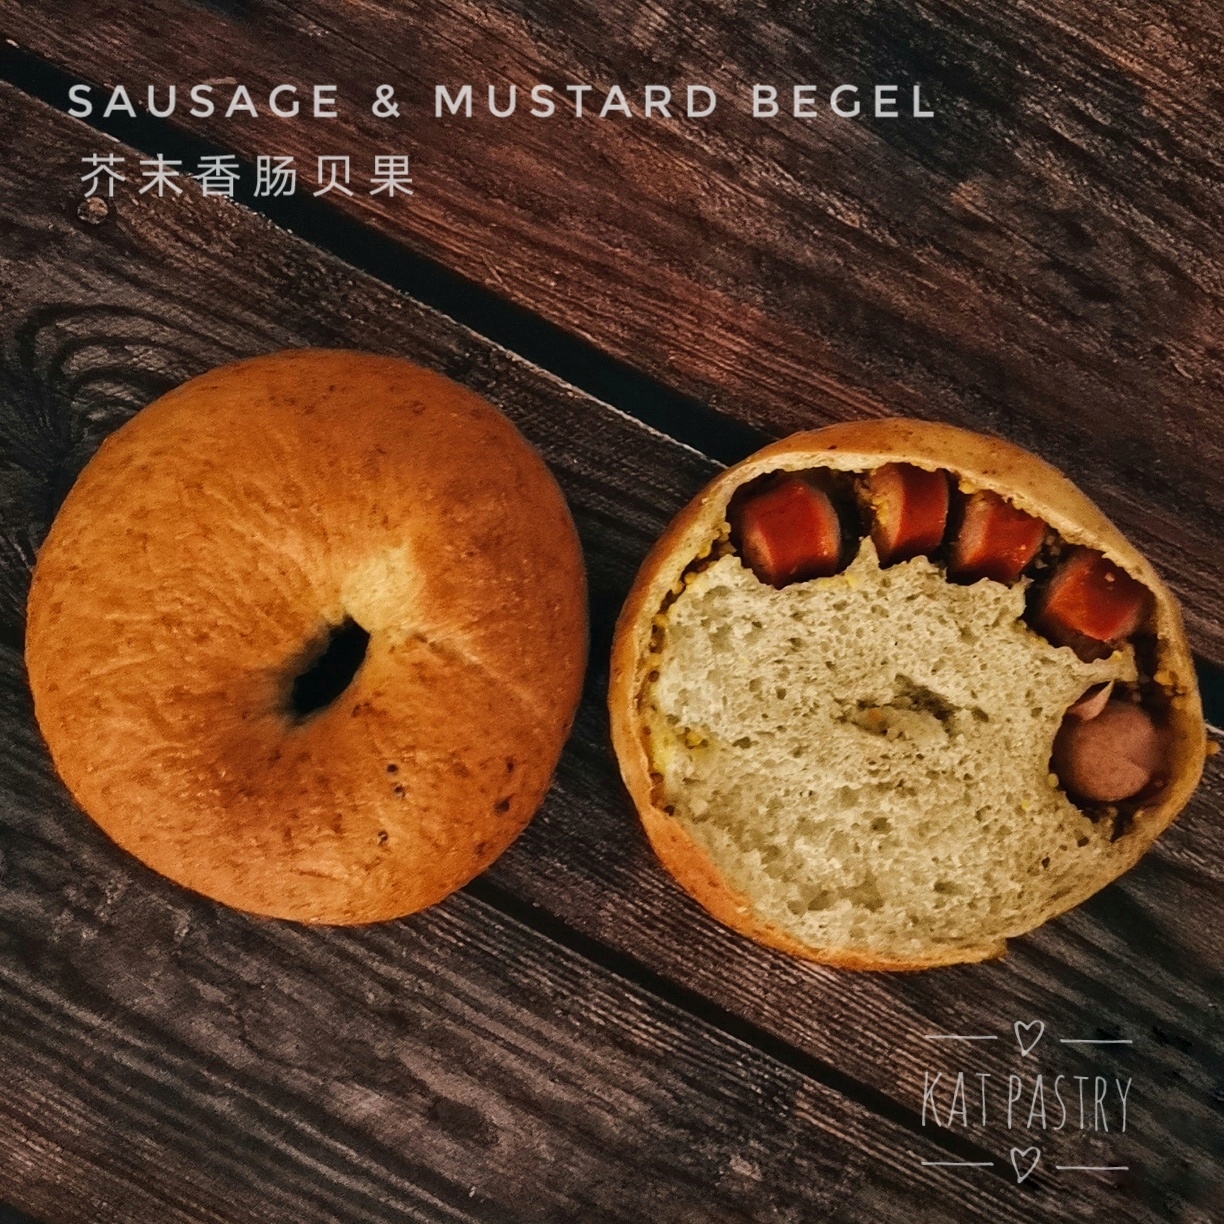 芥末香肠全麦贝果 Sausage & Mustard Begel的做法